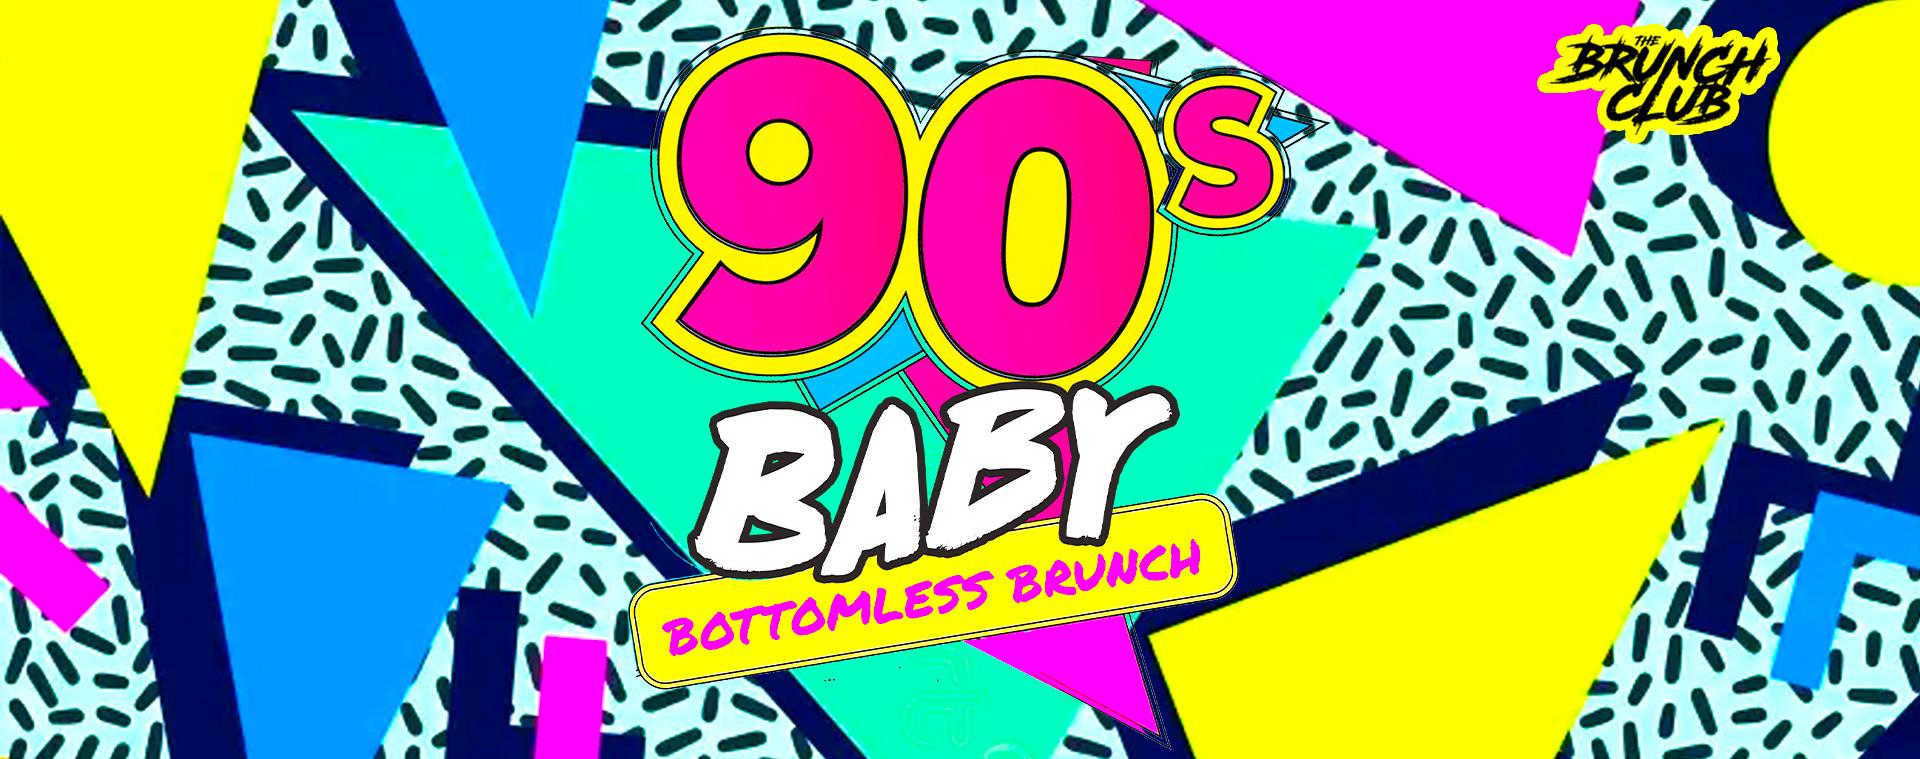 90's Baby Bottomless Brunch - Manchester